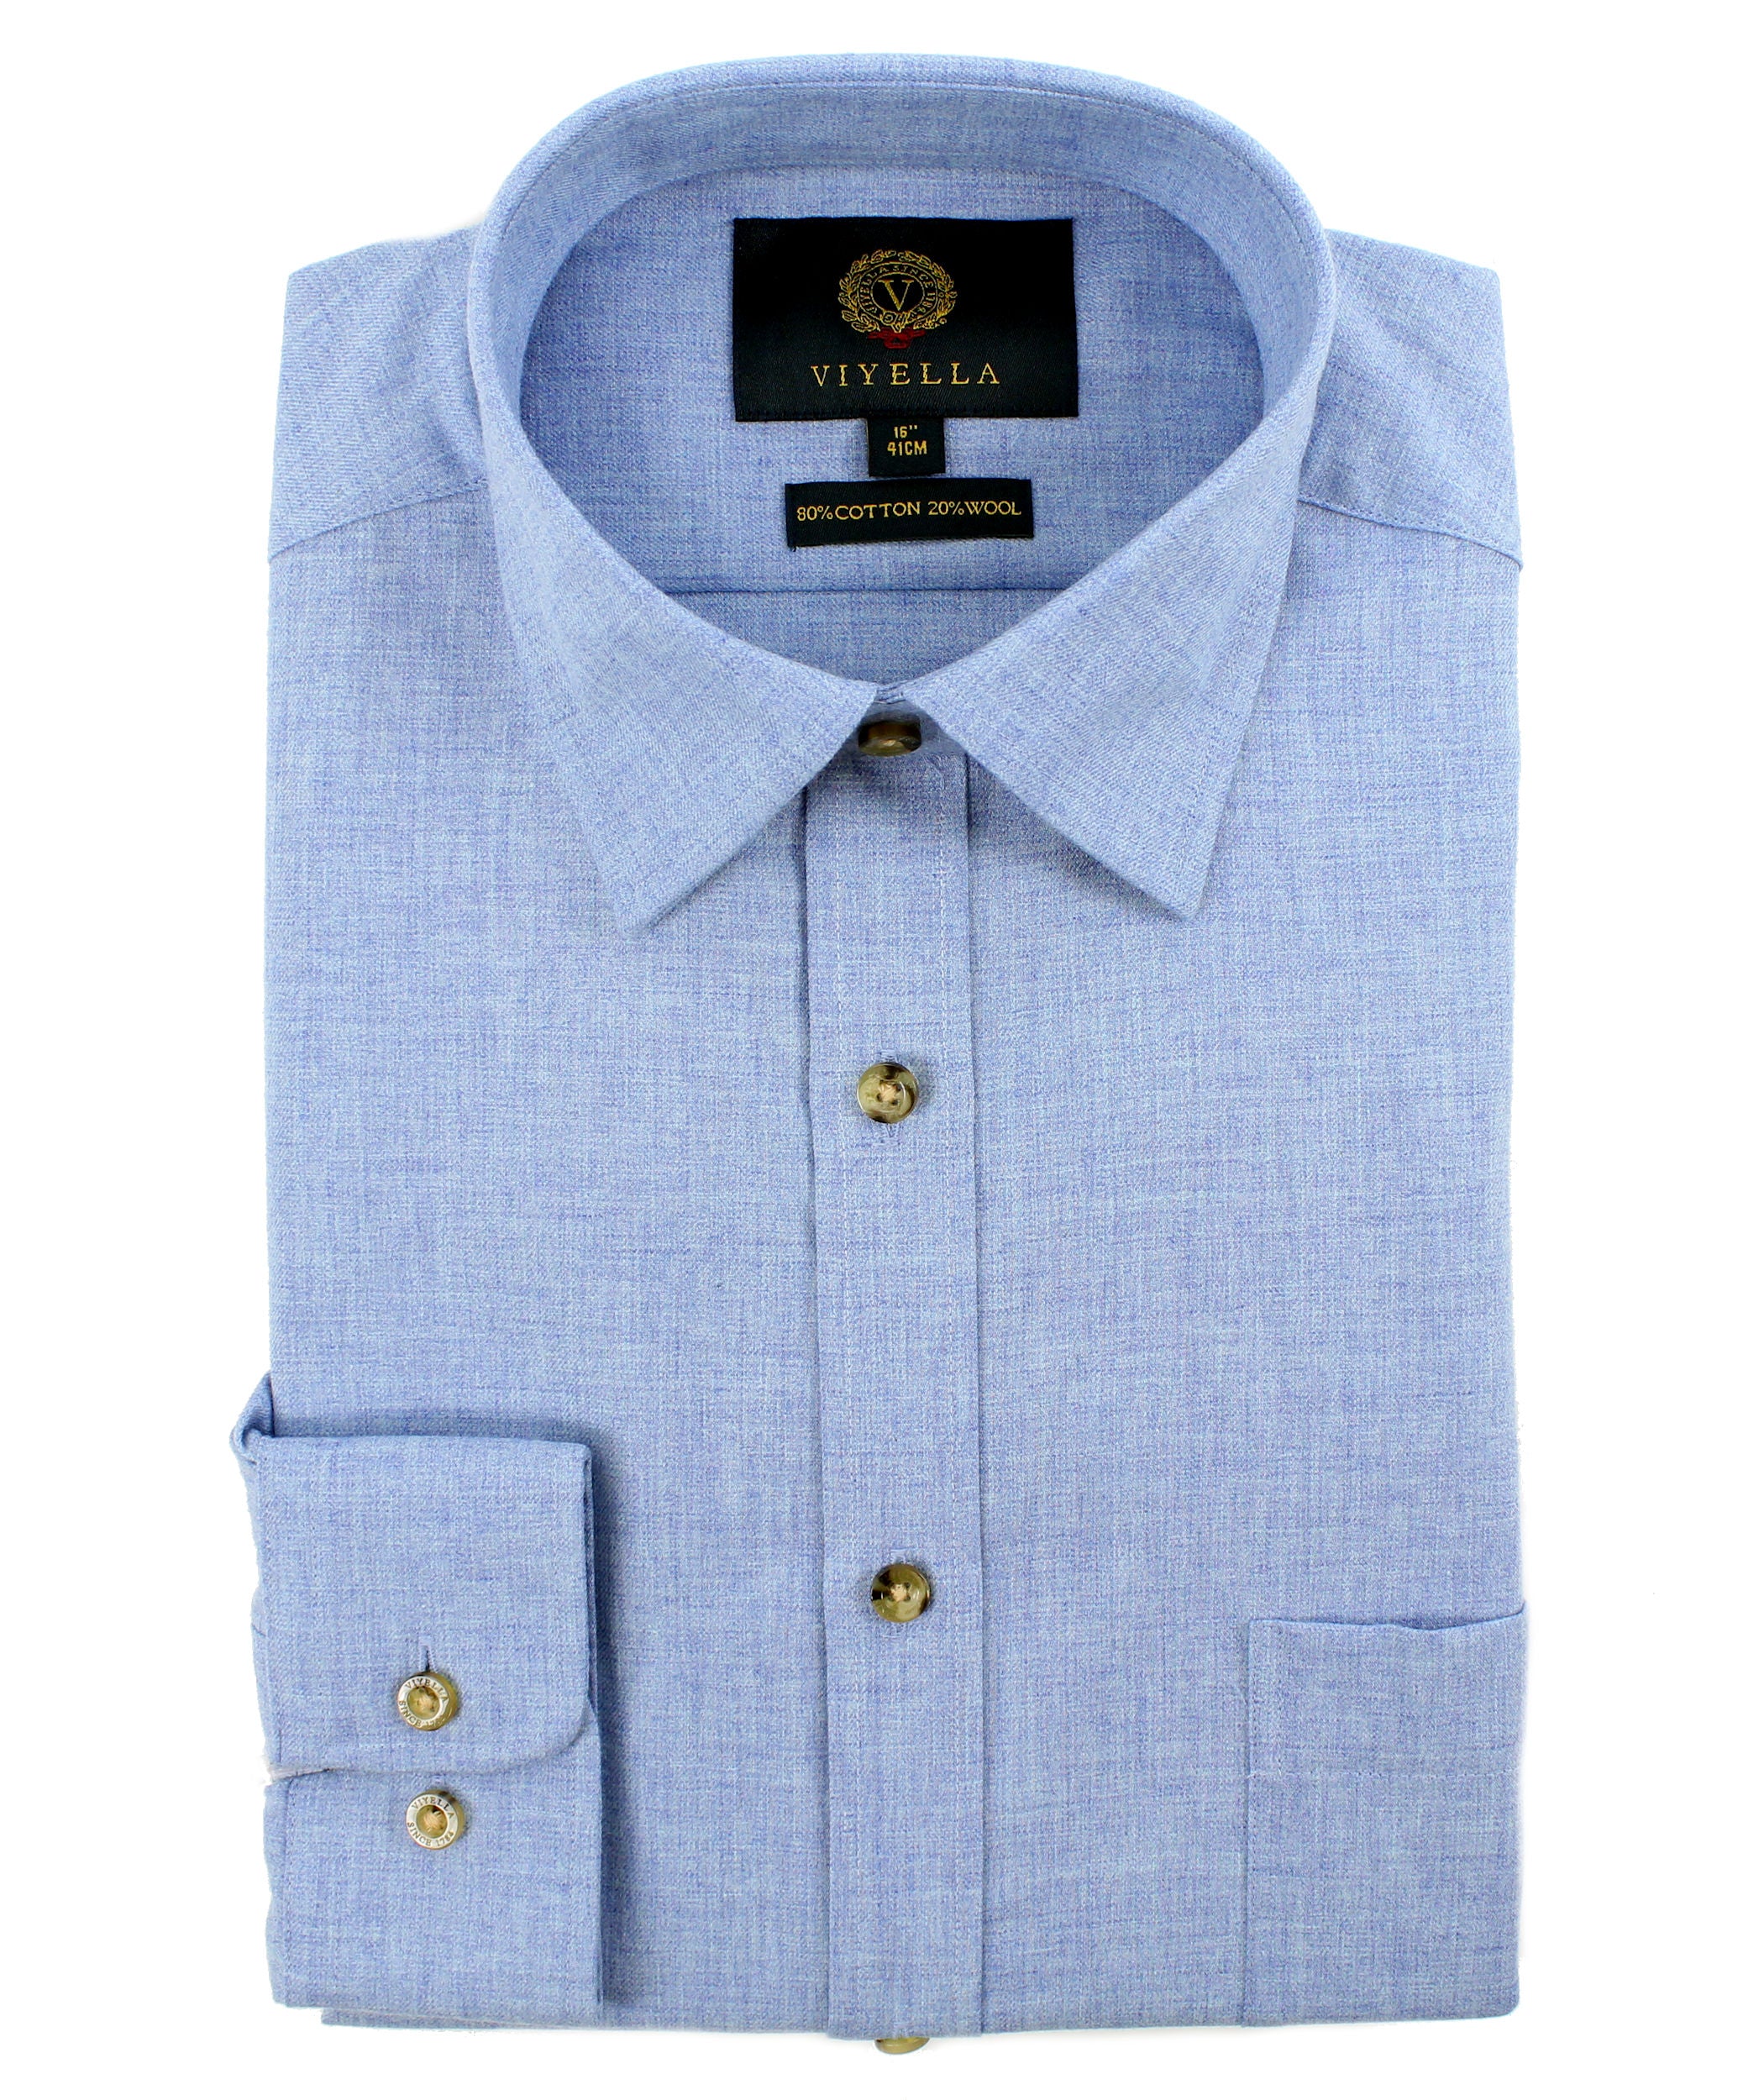 Viyella Plain Sky Blue 80/20 Cotton Wool Blend Shirt